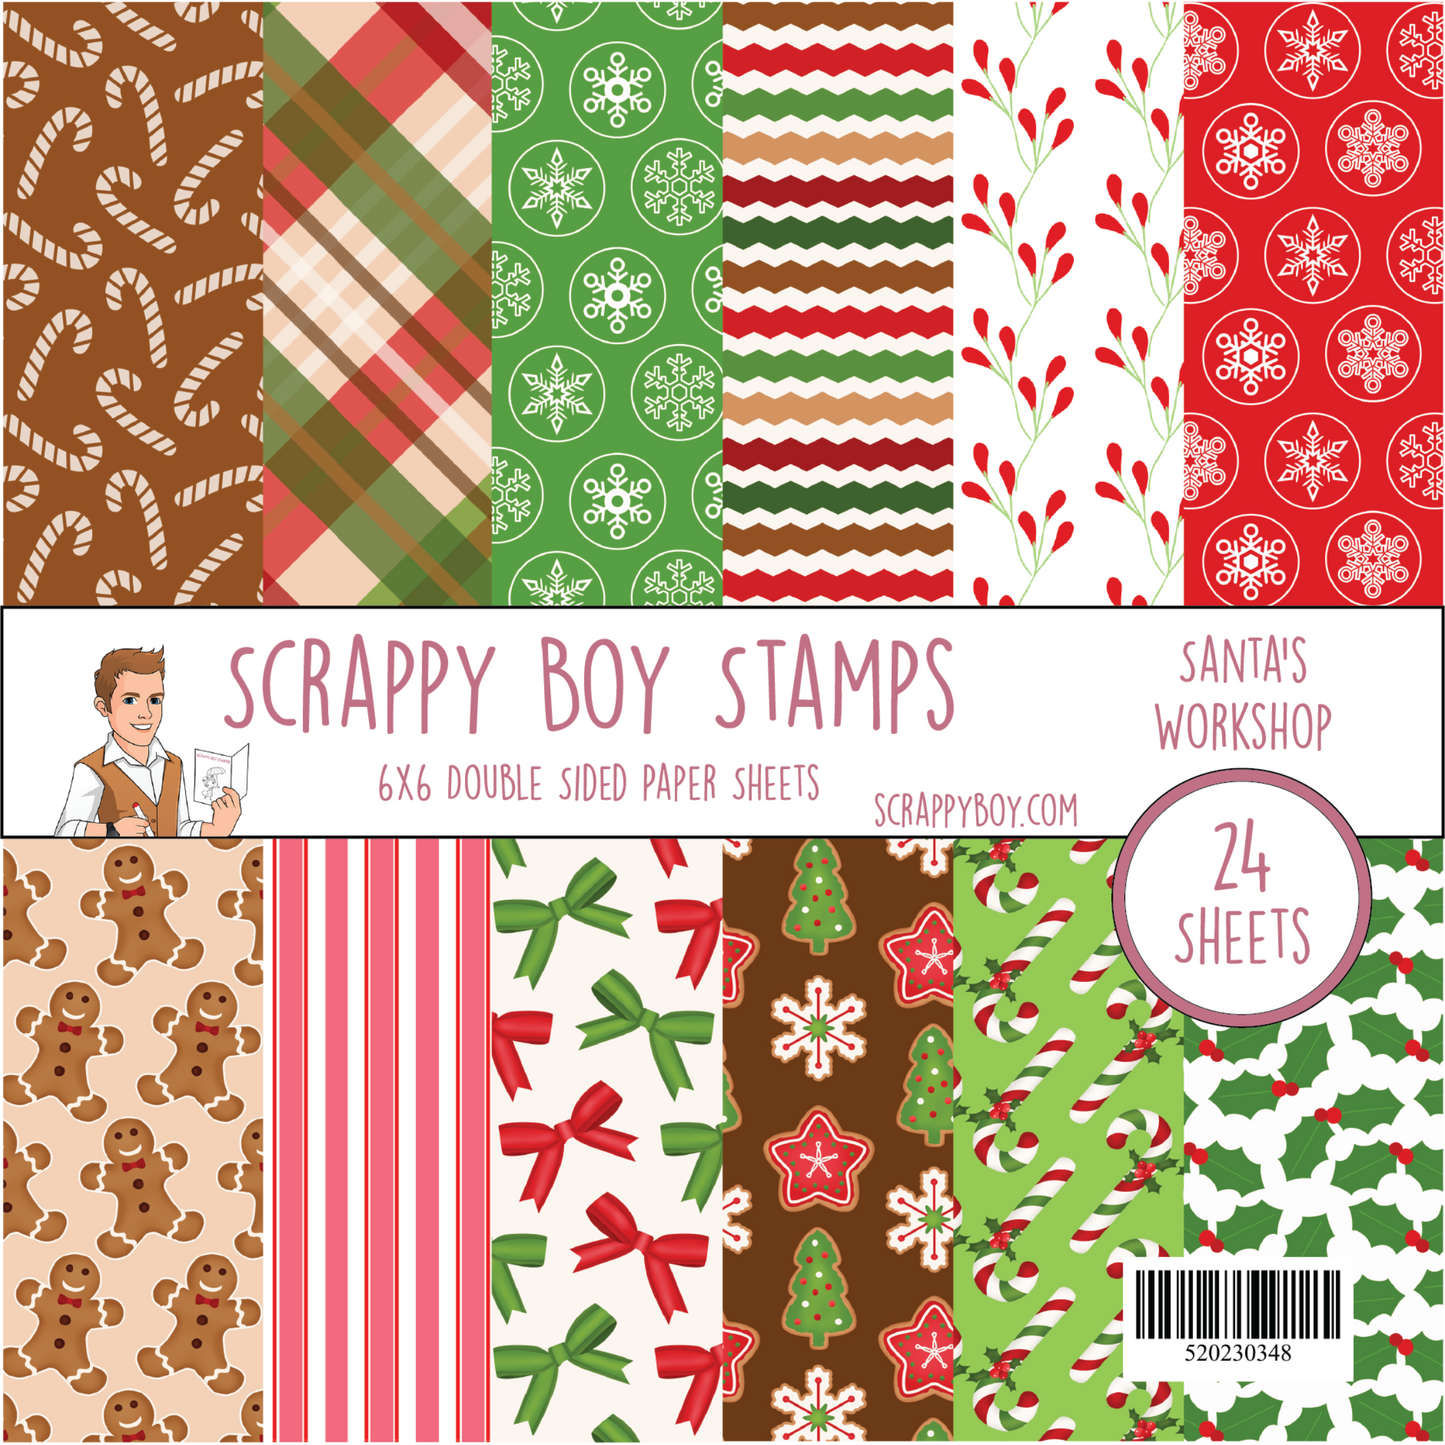 Santa's Workshop 6x6 Paper Pack scrappyboystamps